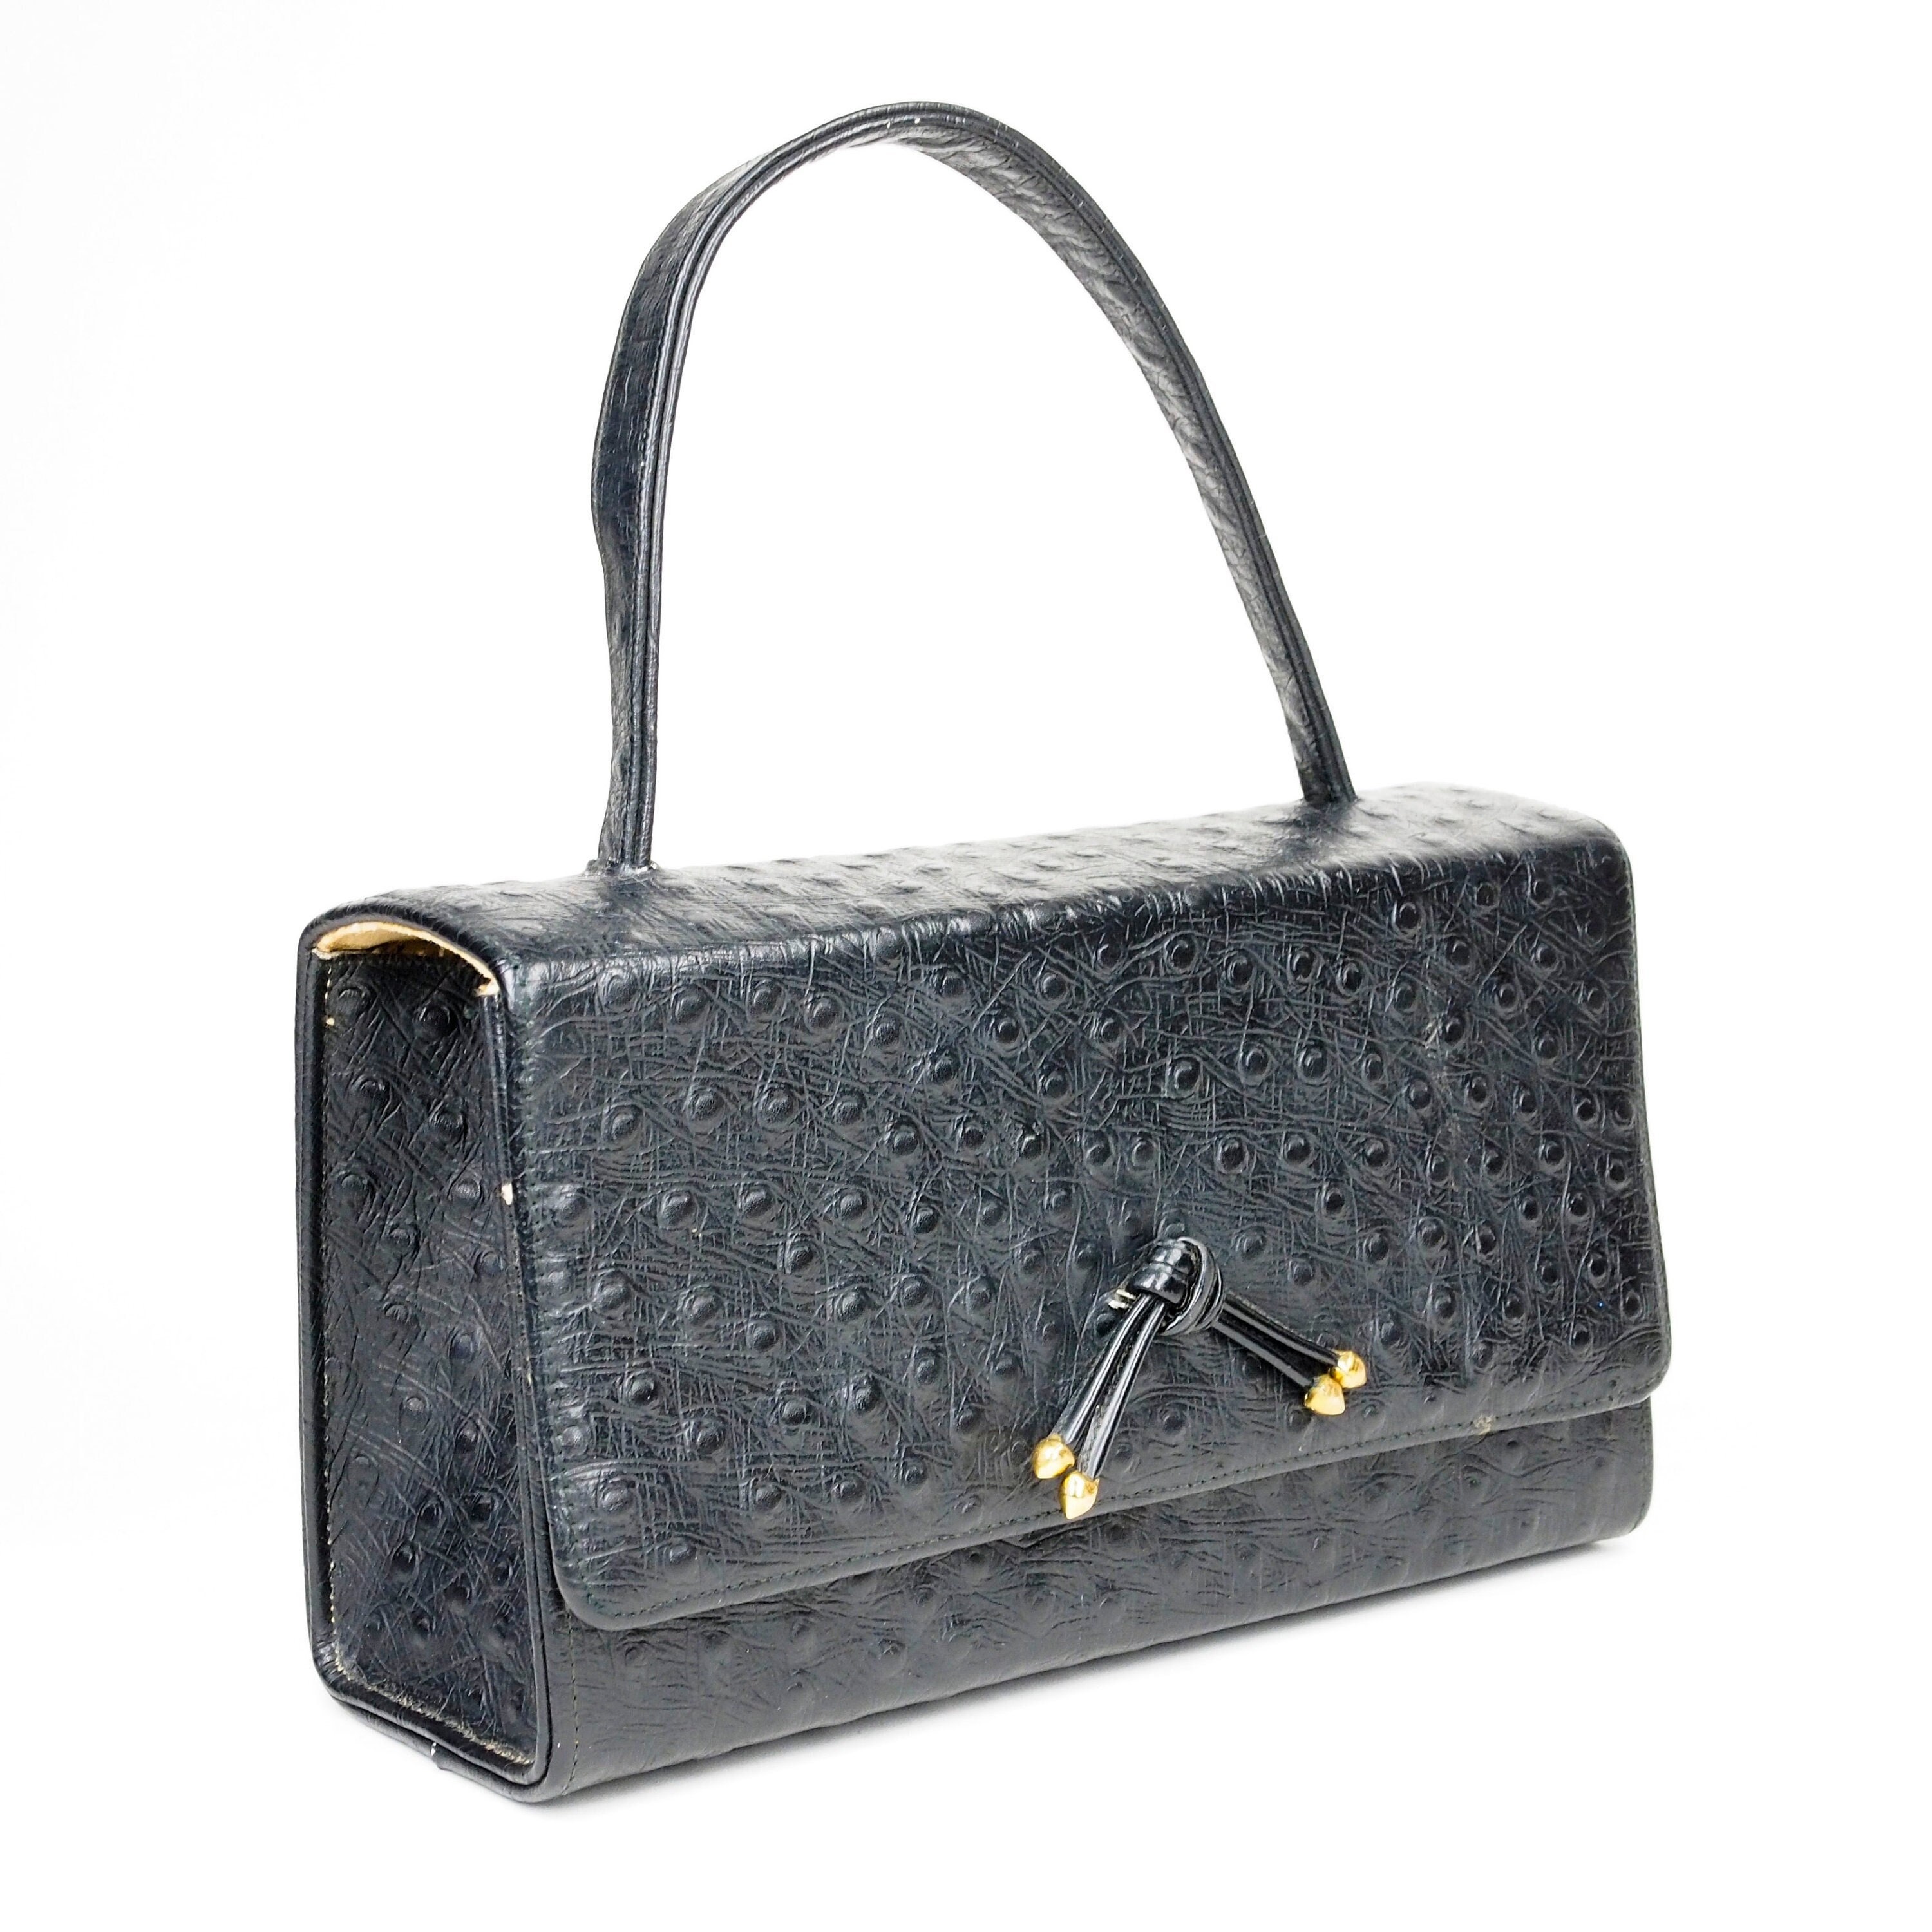 Rare Vintage 50s 60s Hard-Sided Rectangle Box Bag: Black Tassel Accent Ostrich Texture Top Handle Handbag Purse Saddle Mid Century Modern